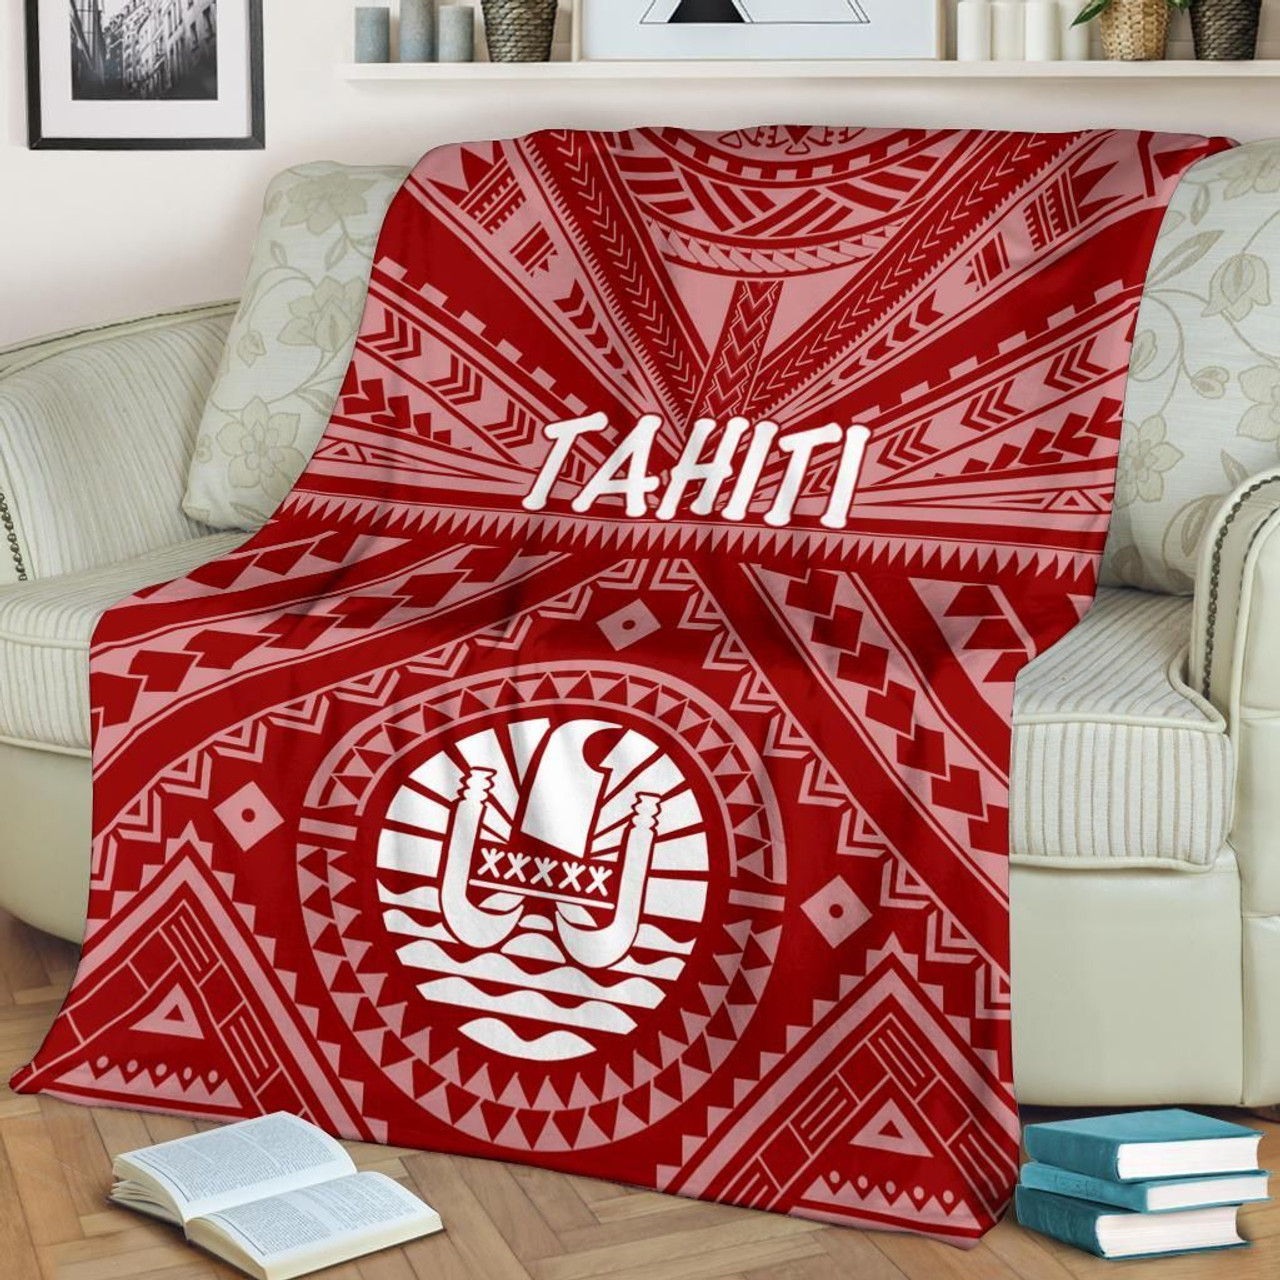 Tahiti Premium Blanket - Tahiti Seal In Polynesian Tattoo Style (Red) 2